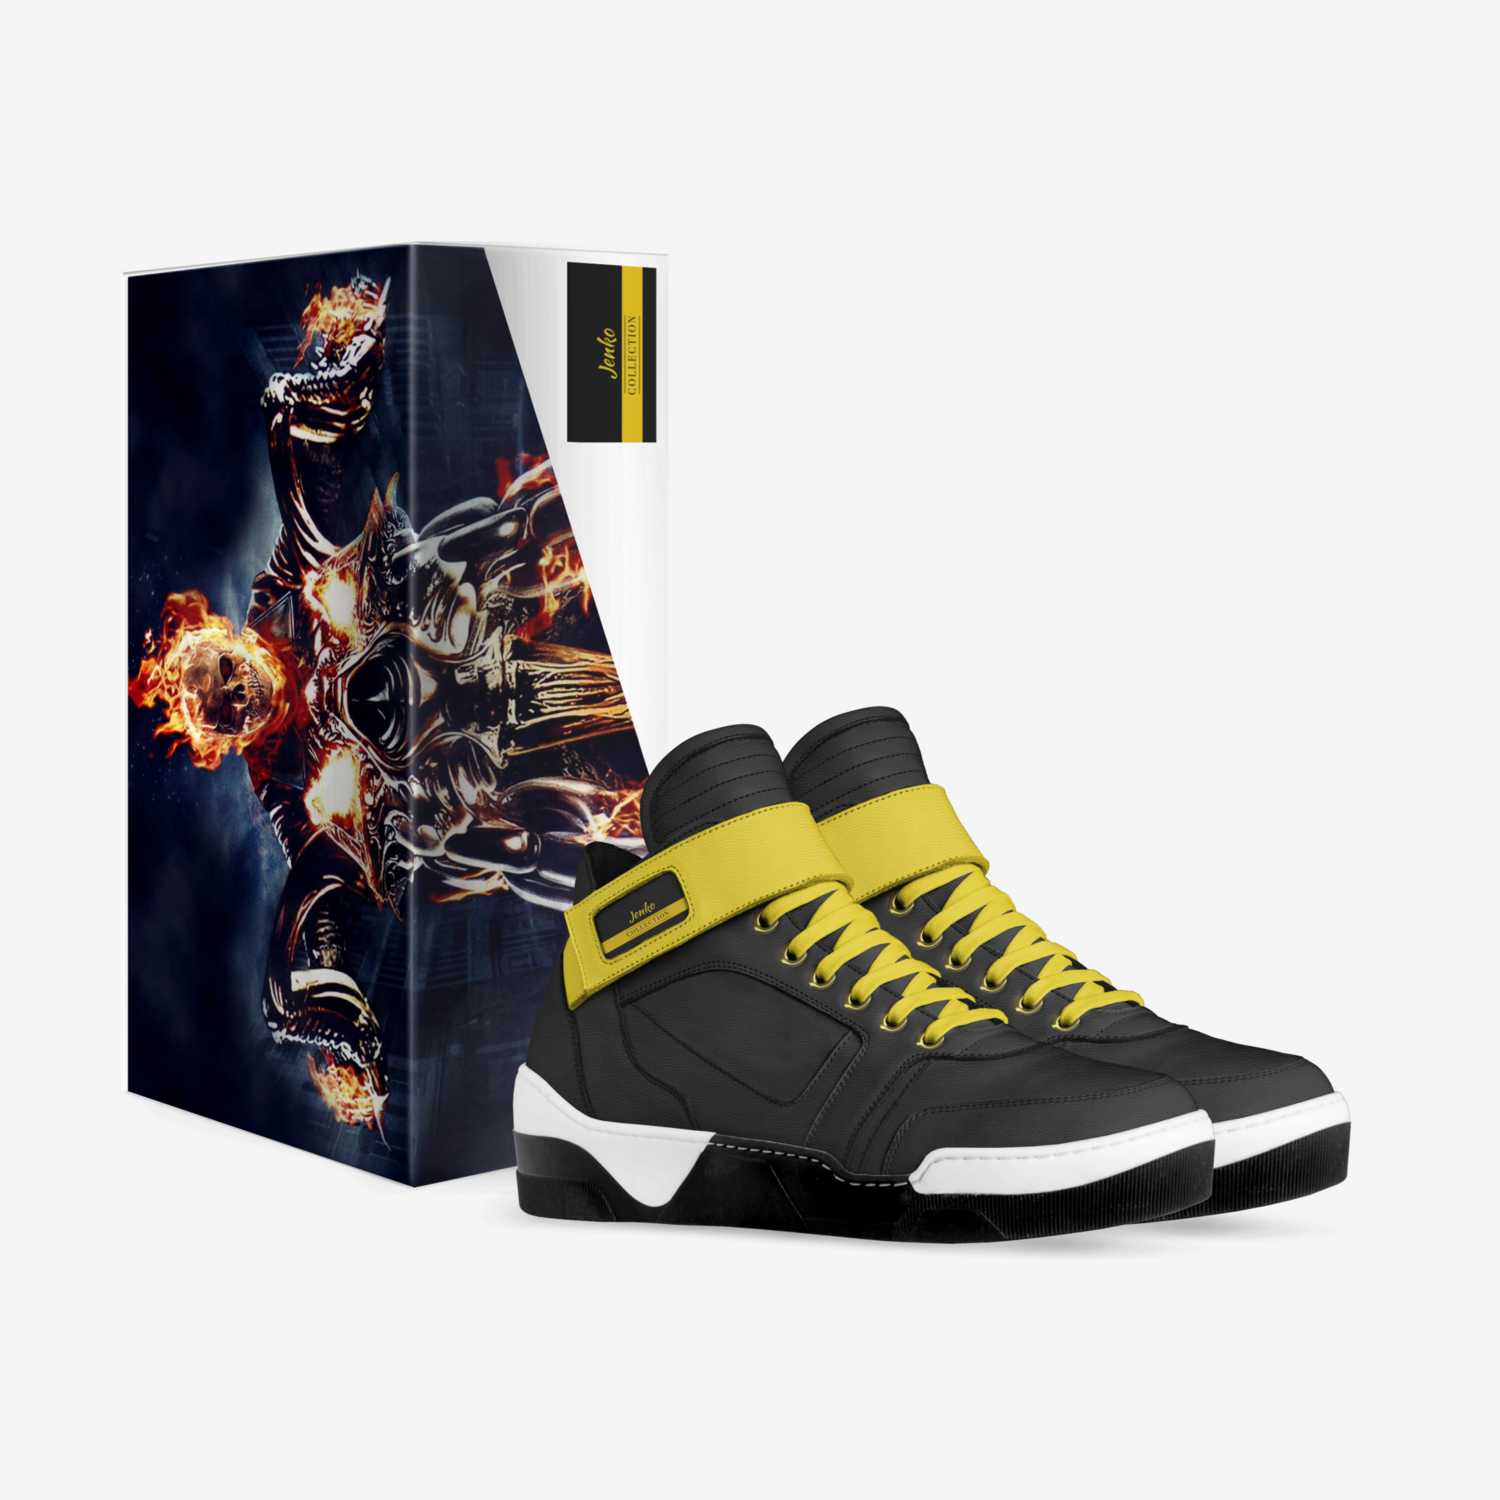 Jenko custom made in Italy shoes by Eyoel Alebachew | Box view